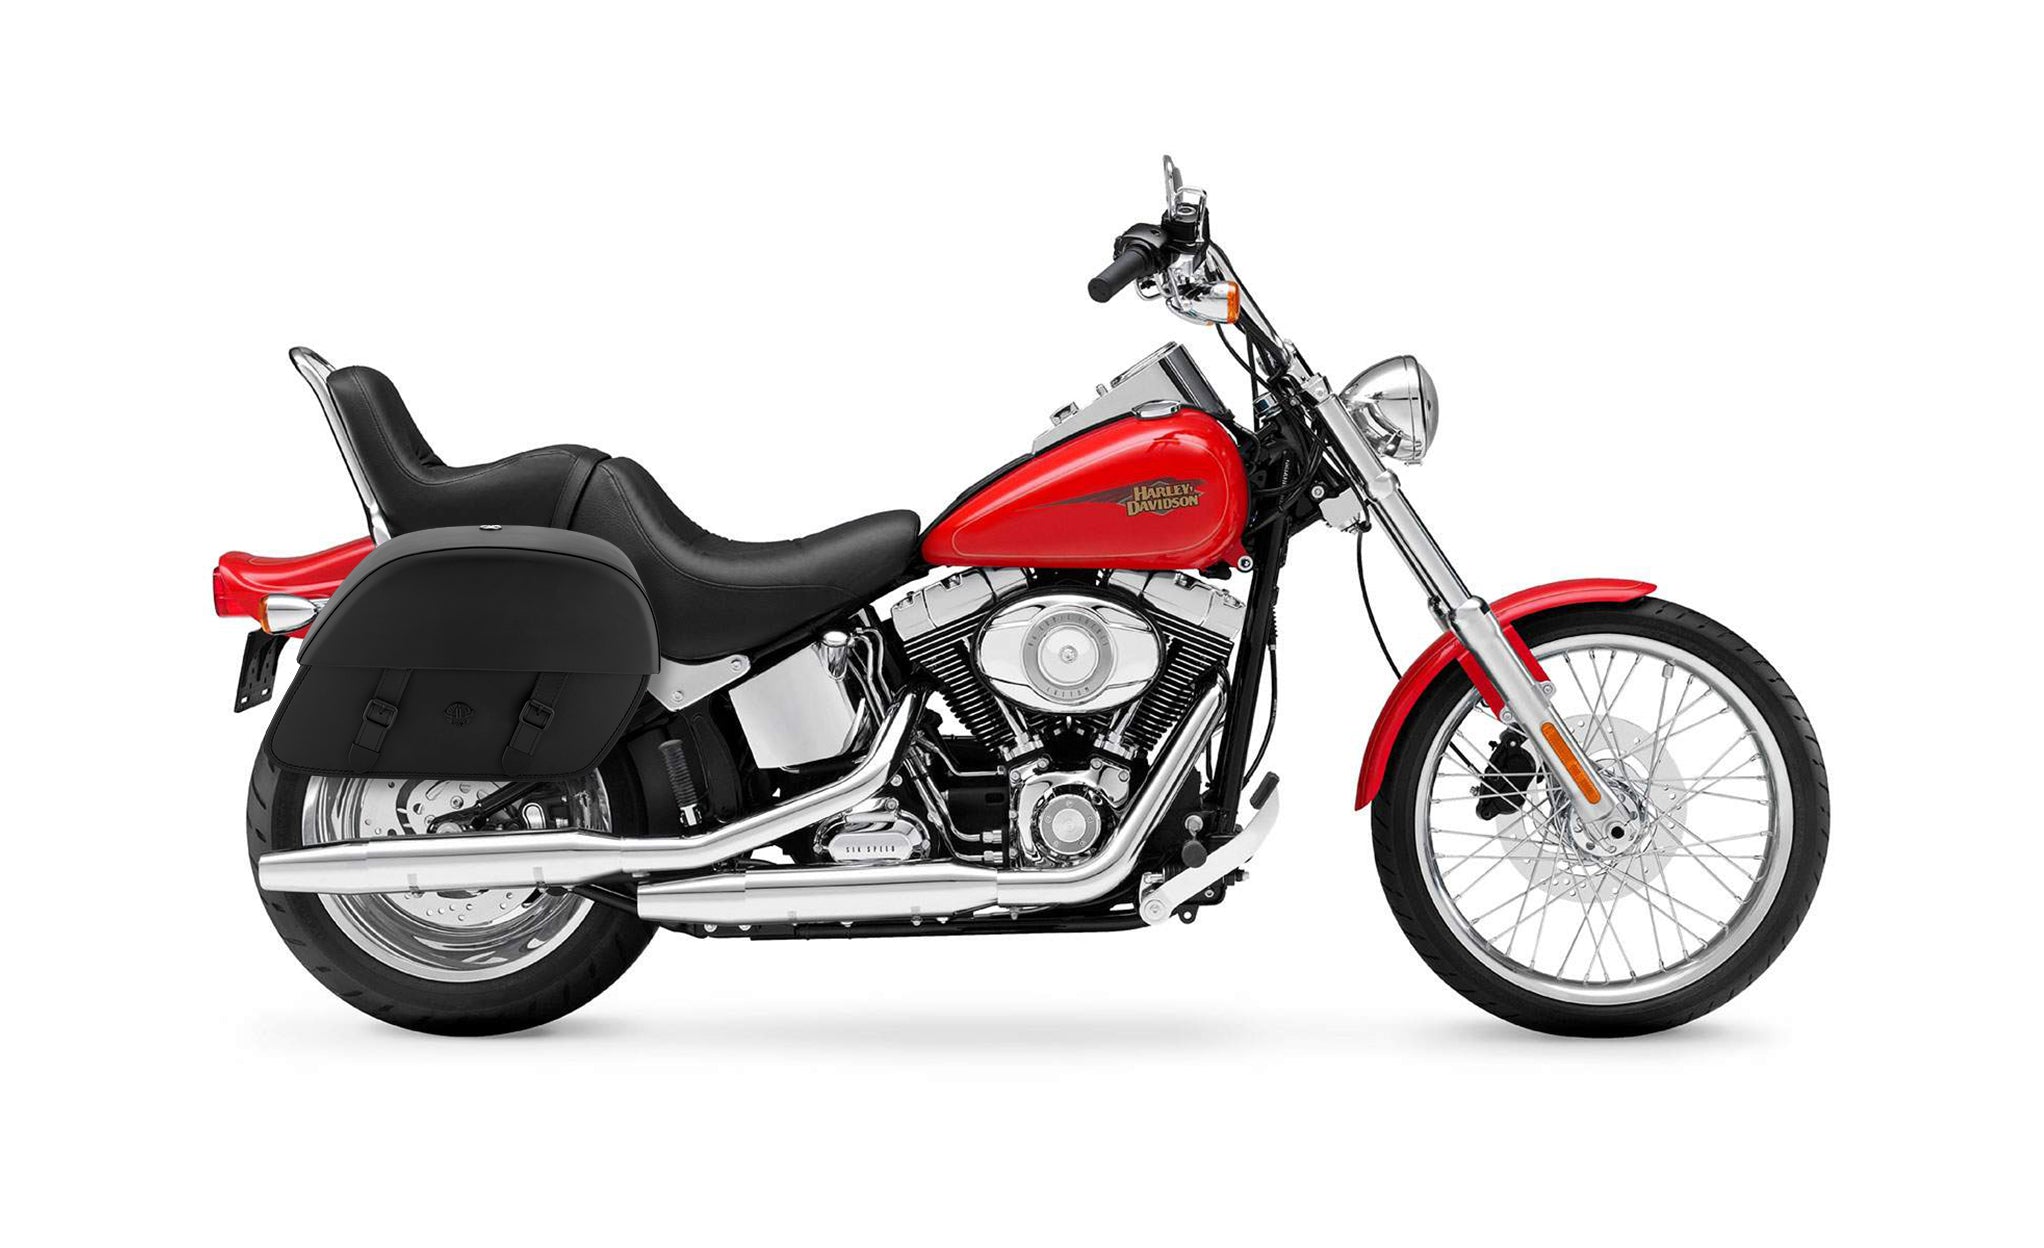 Viking Baelor Large Leather Motorcycle Saddlebags For Harley Davidson Softail Custom Fxstc on Bike Photo @expand